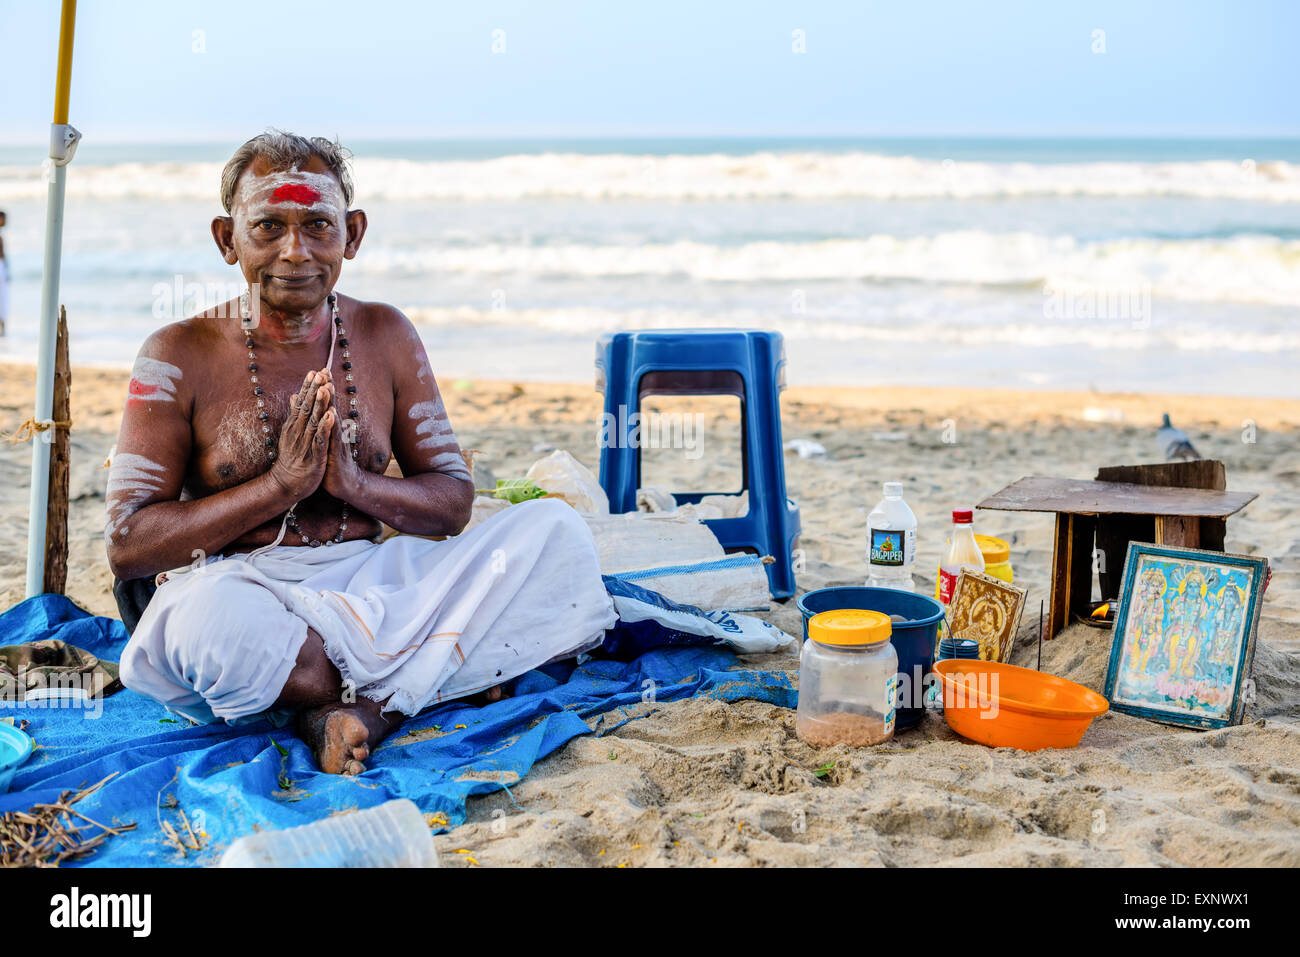 Varkala, India - February 22, 2013: Hindu Brahmin with religious attributes sits in Namaste mudra on the beach. Varkala beach, K Stock Photo